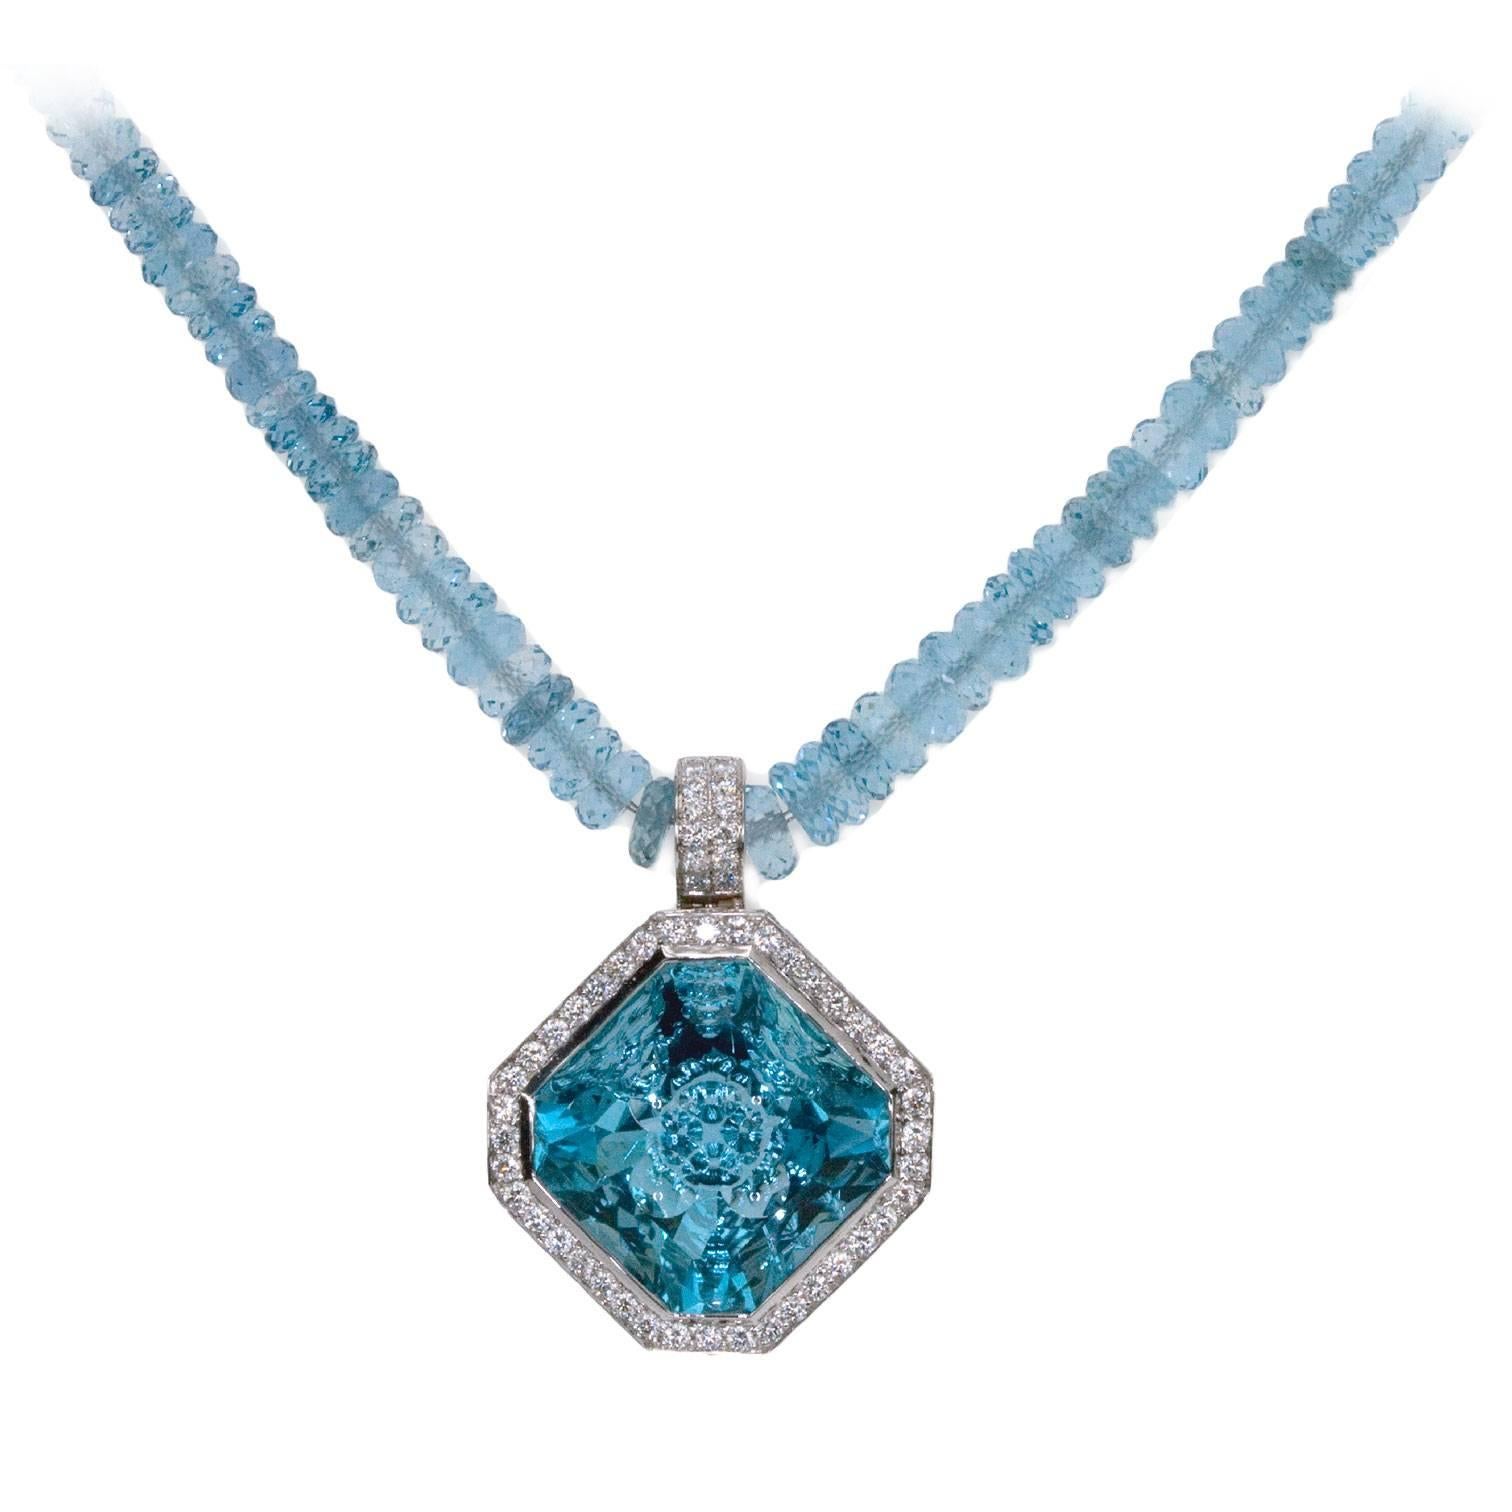  A 'Samuel Getz" Fine Carved Aqua Drop Pendant with Aqua Beads & Diamonds For Sale